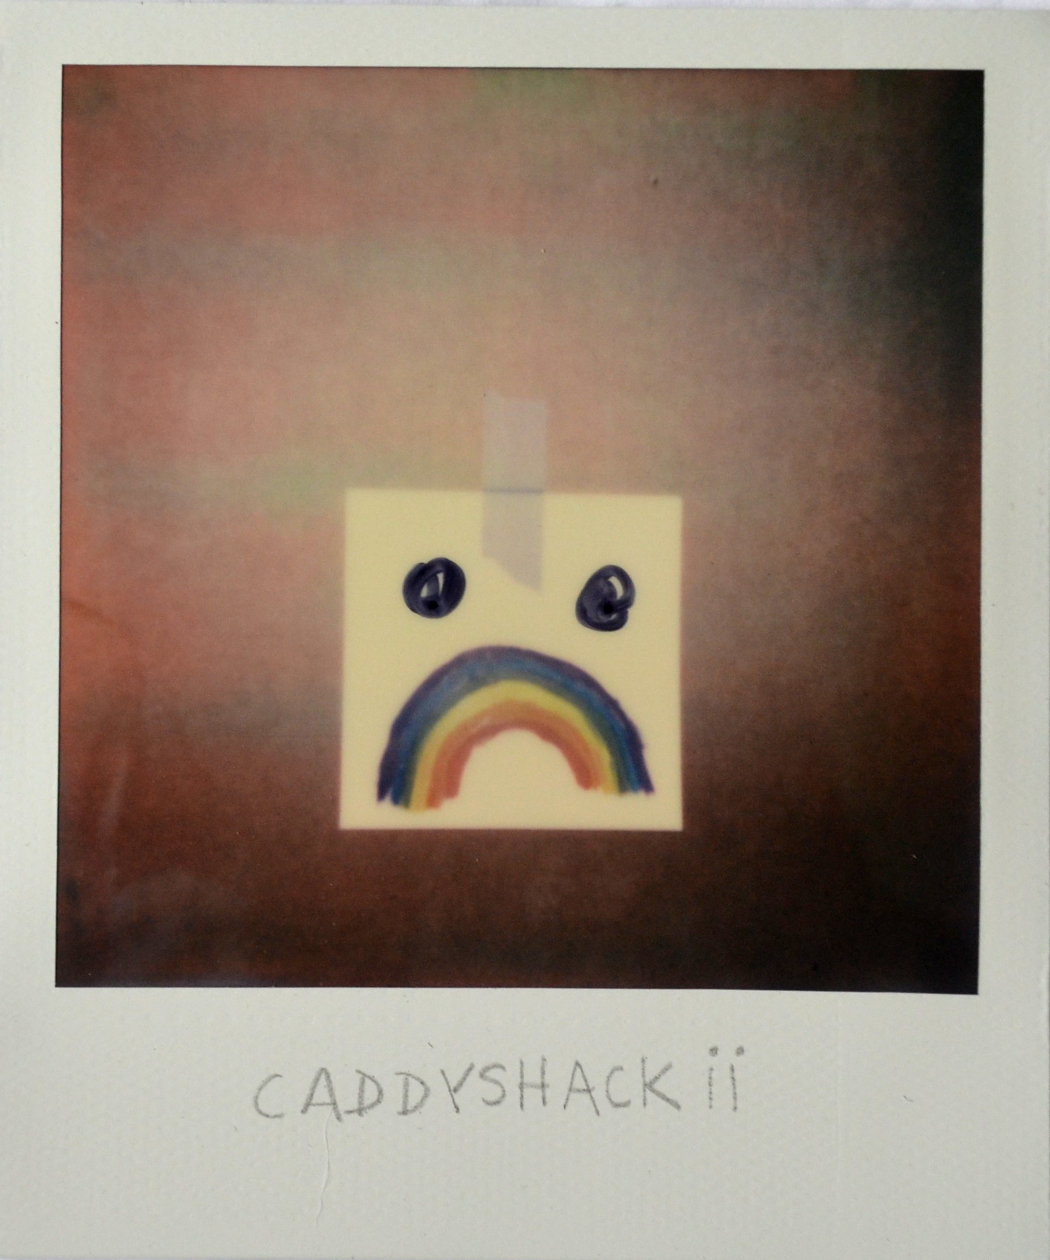 Untitled (Caddyshack ii).jpg